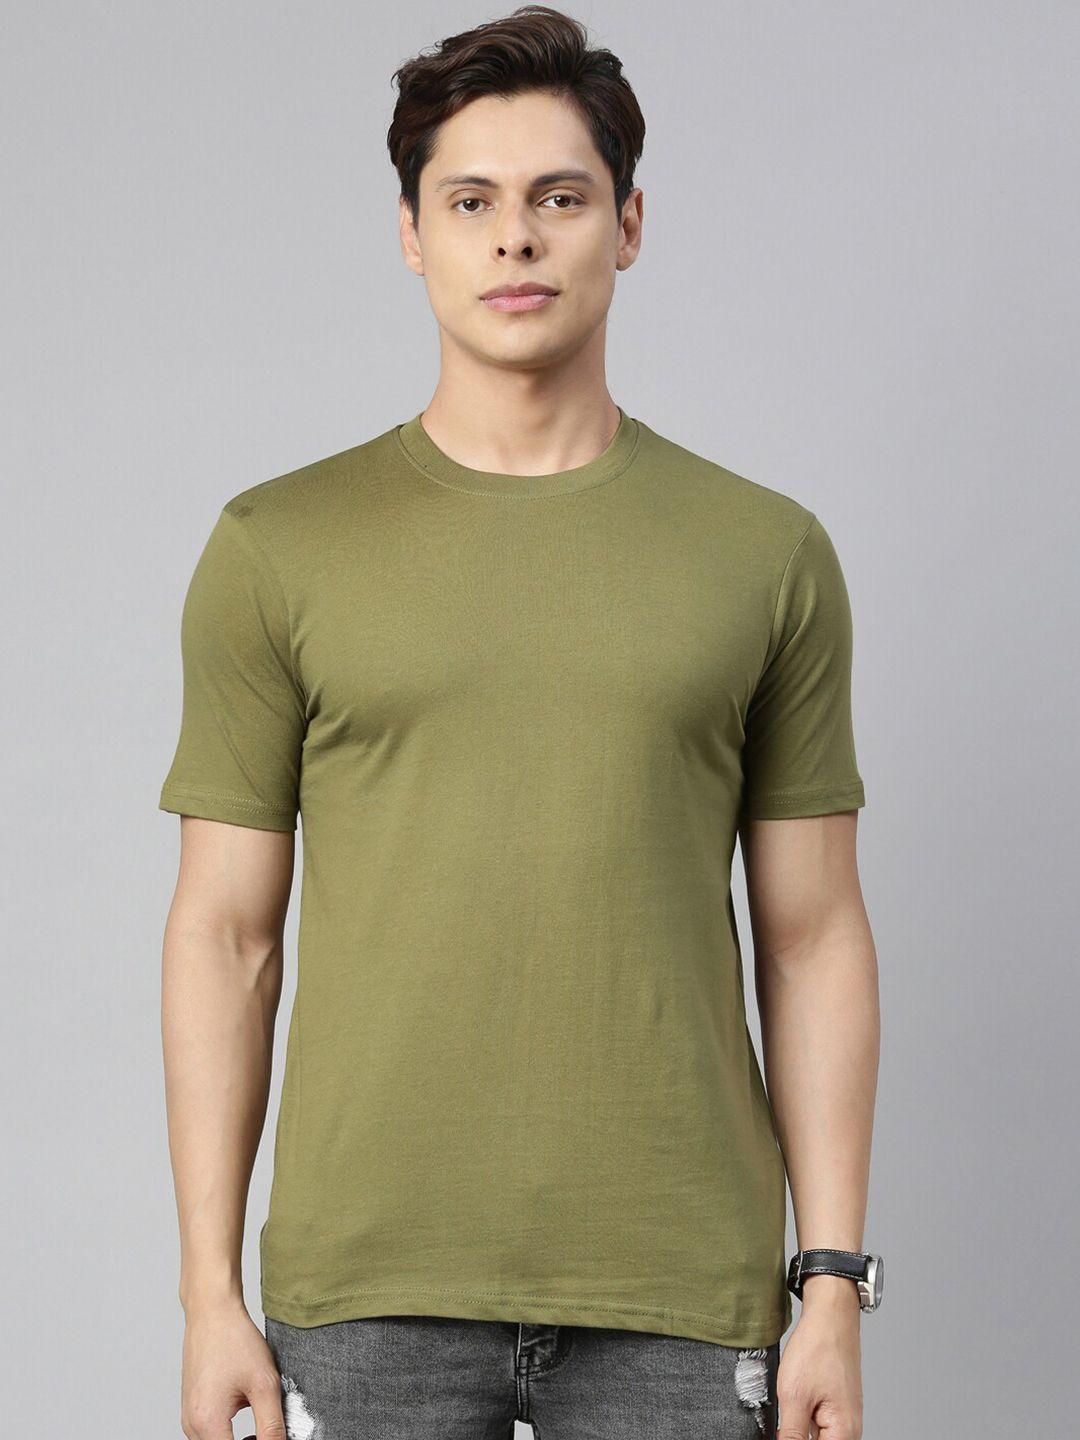 recast-men-olive-green-pure-cotton-t-shirt